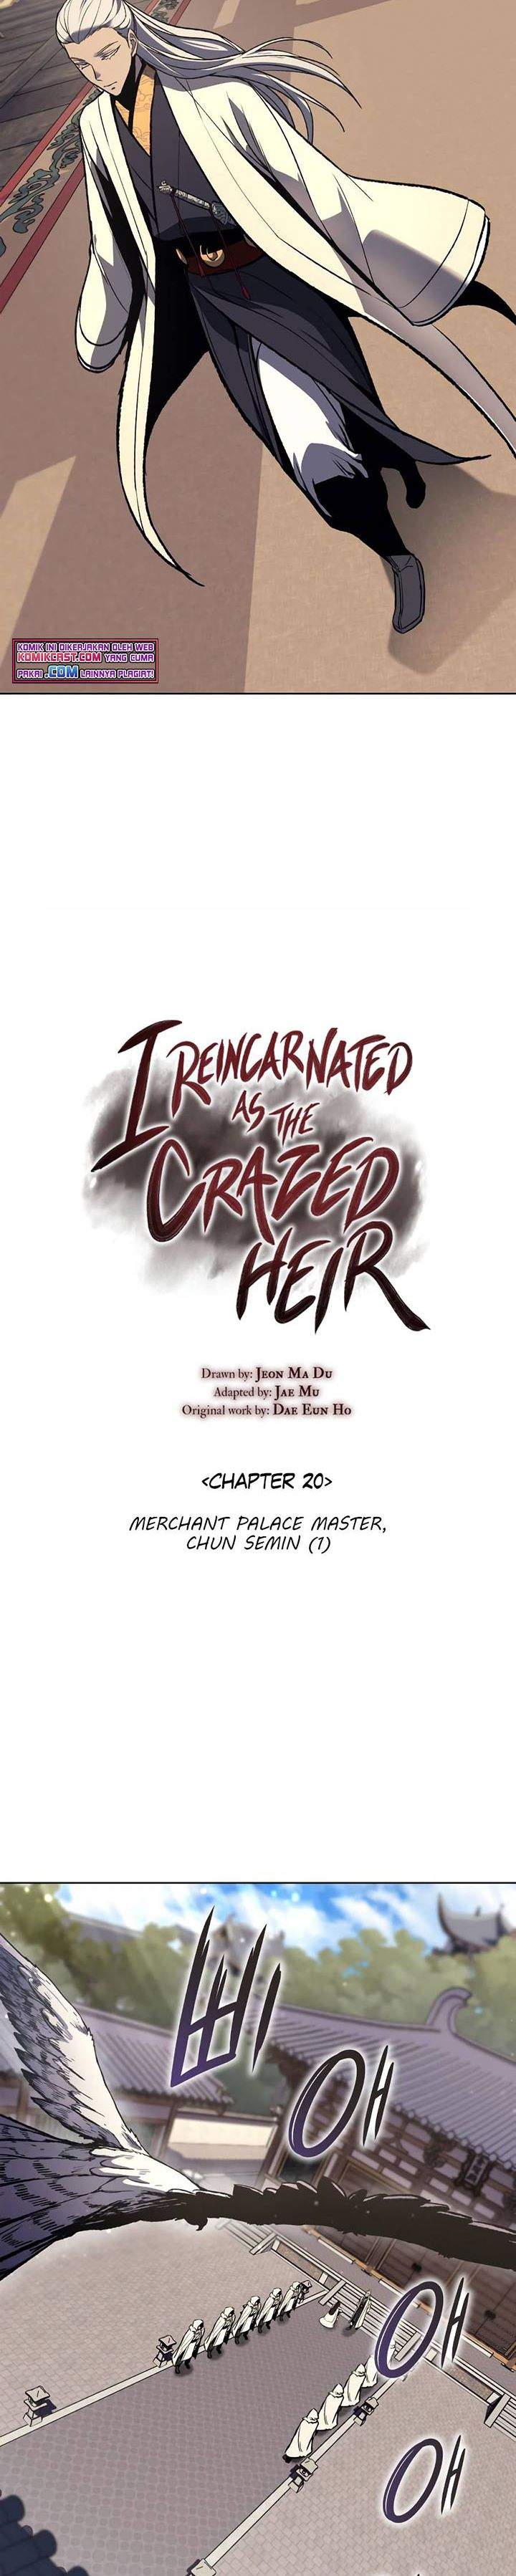 I Reincarnated As the Crazed Heir Chapter 20